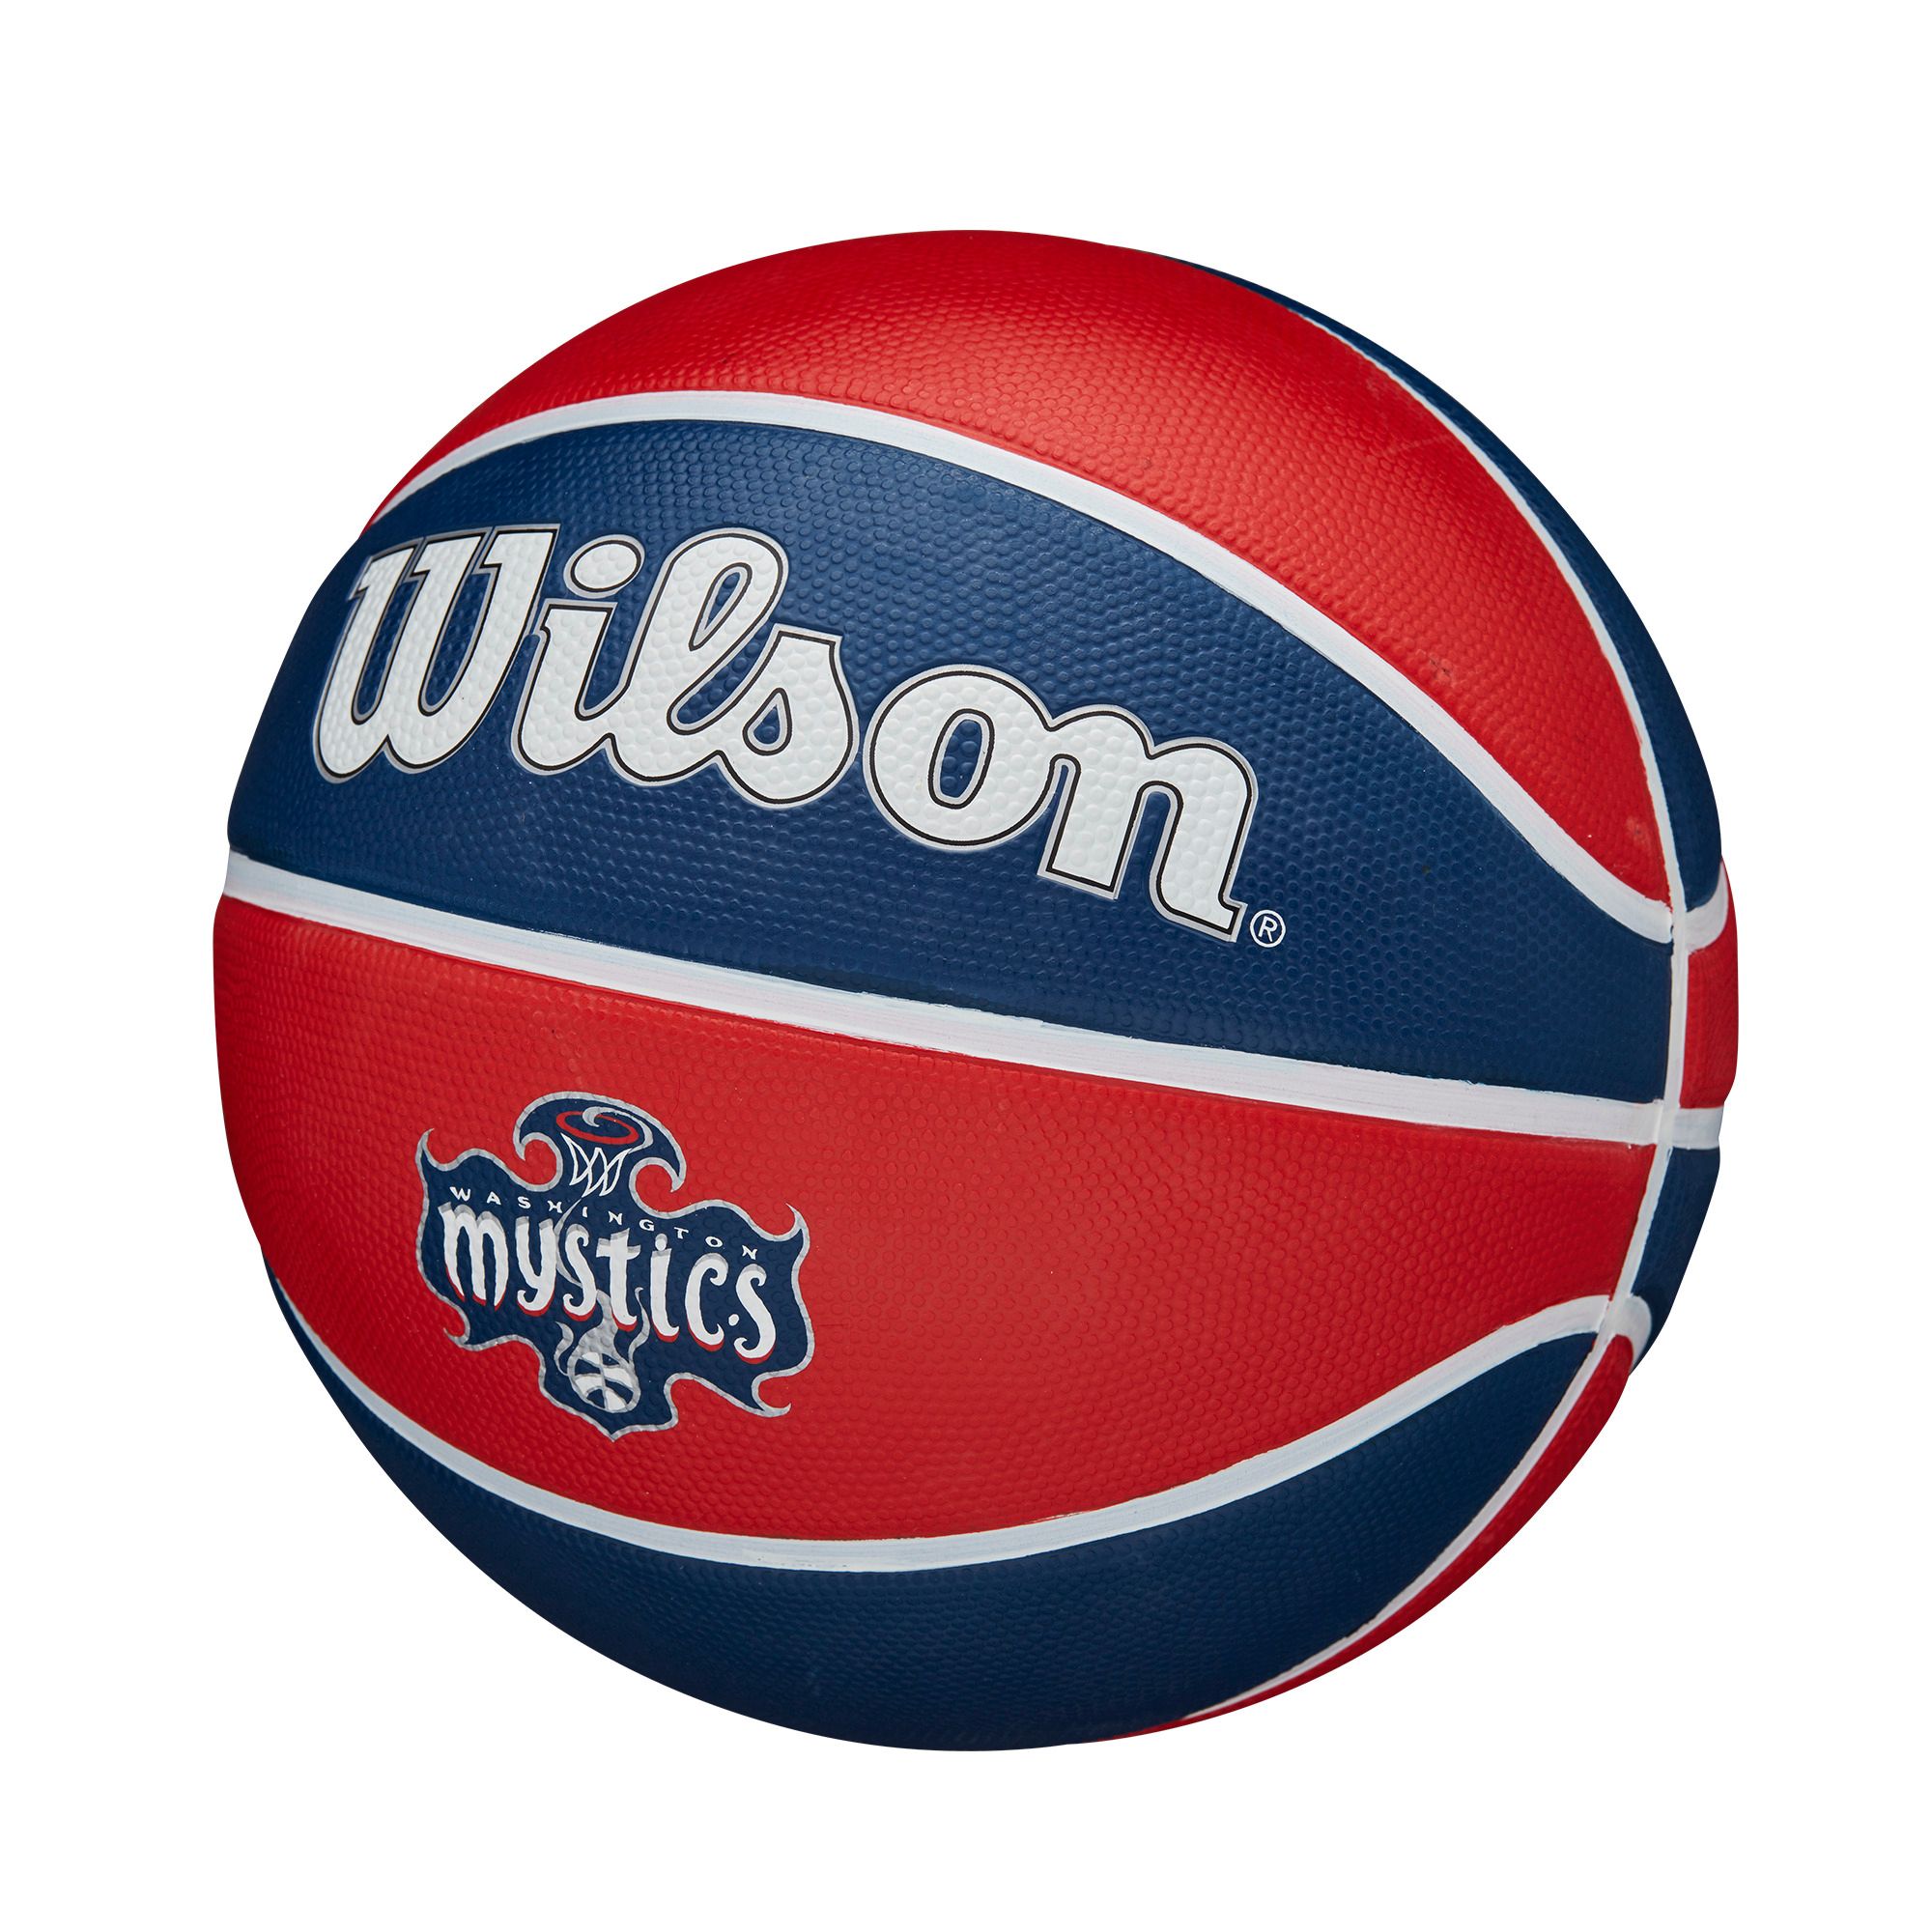 Wilson Washington Mystics 9" Tribute Basketball